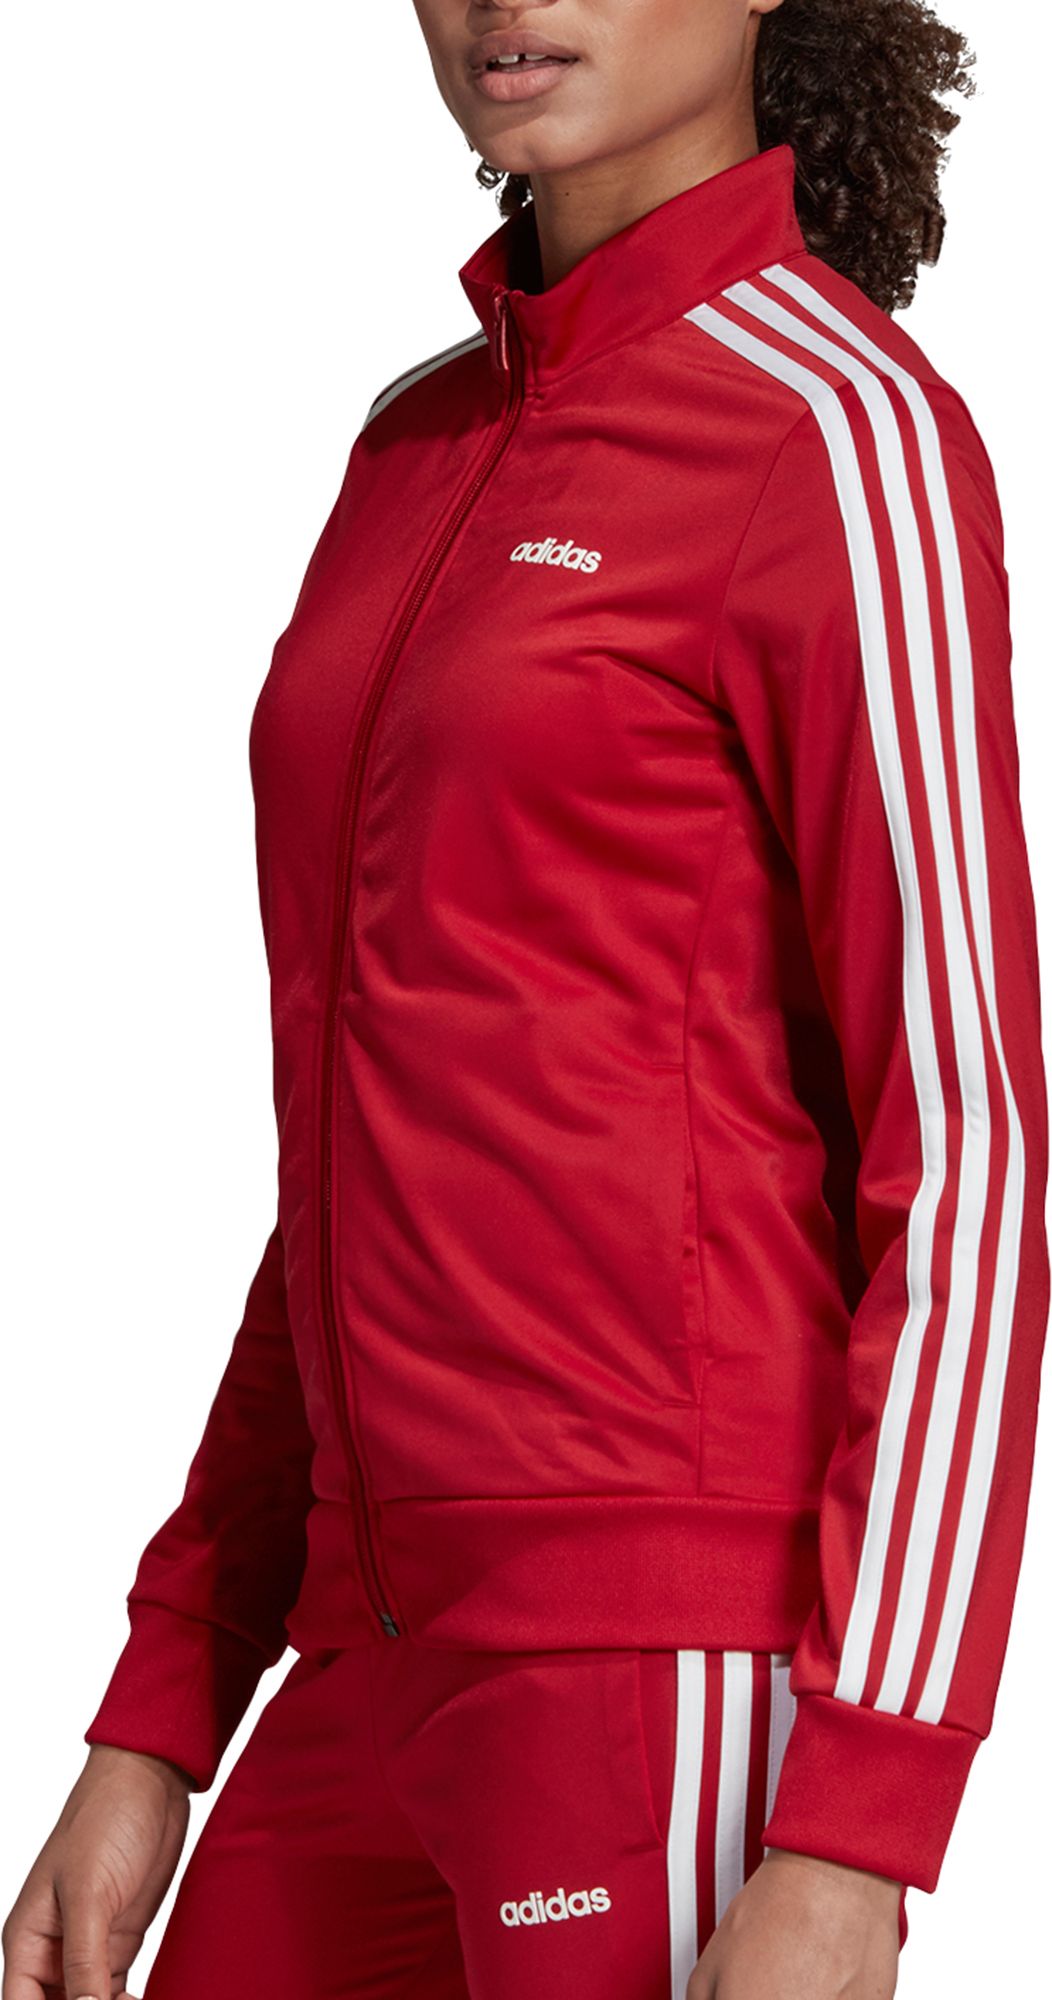 adidas women's tricot jacket